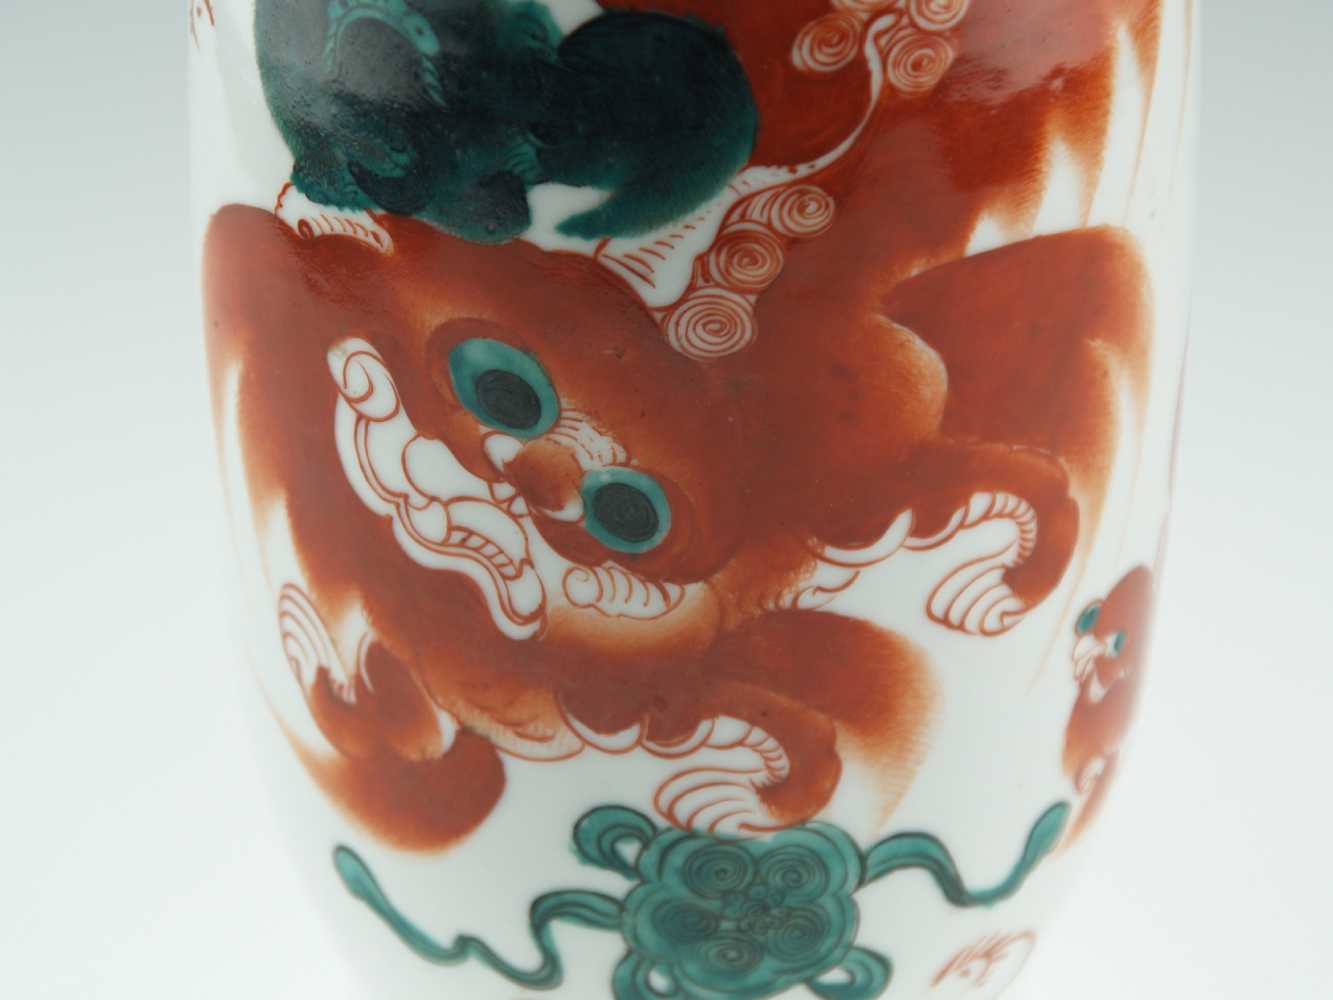 Balustervase - Porzellan,China,20.Jh.,Schmetterling-Han dhaben am Hals,frontseitiger polychromer - Image 2 of 4